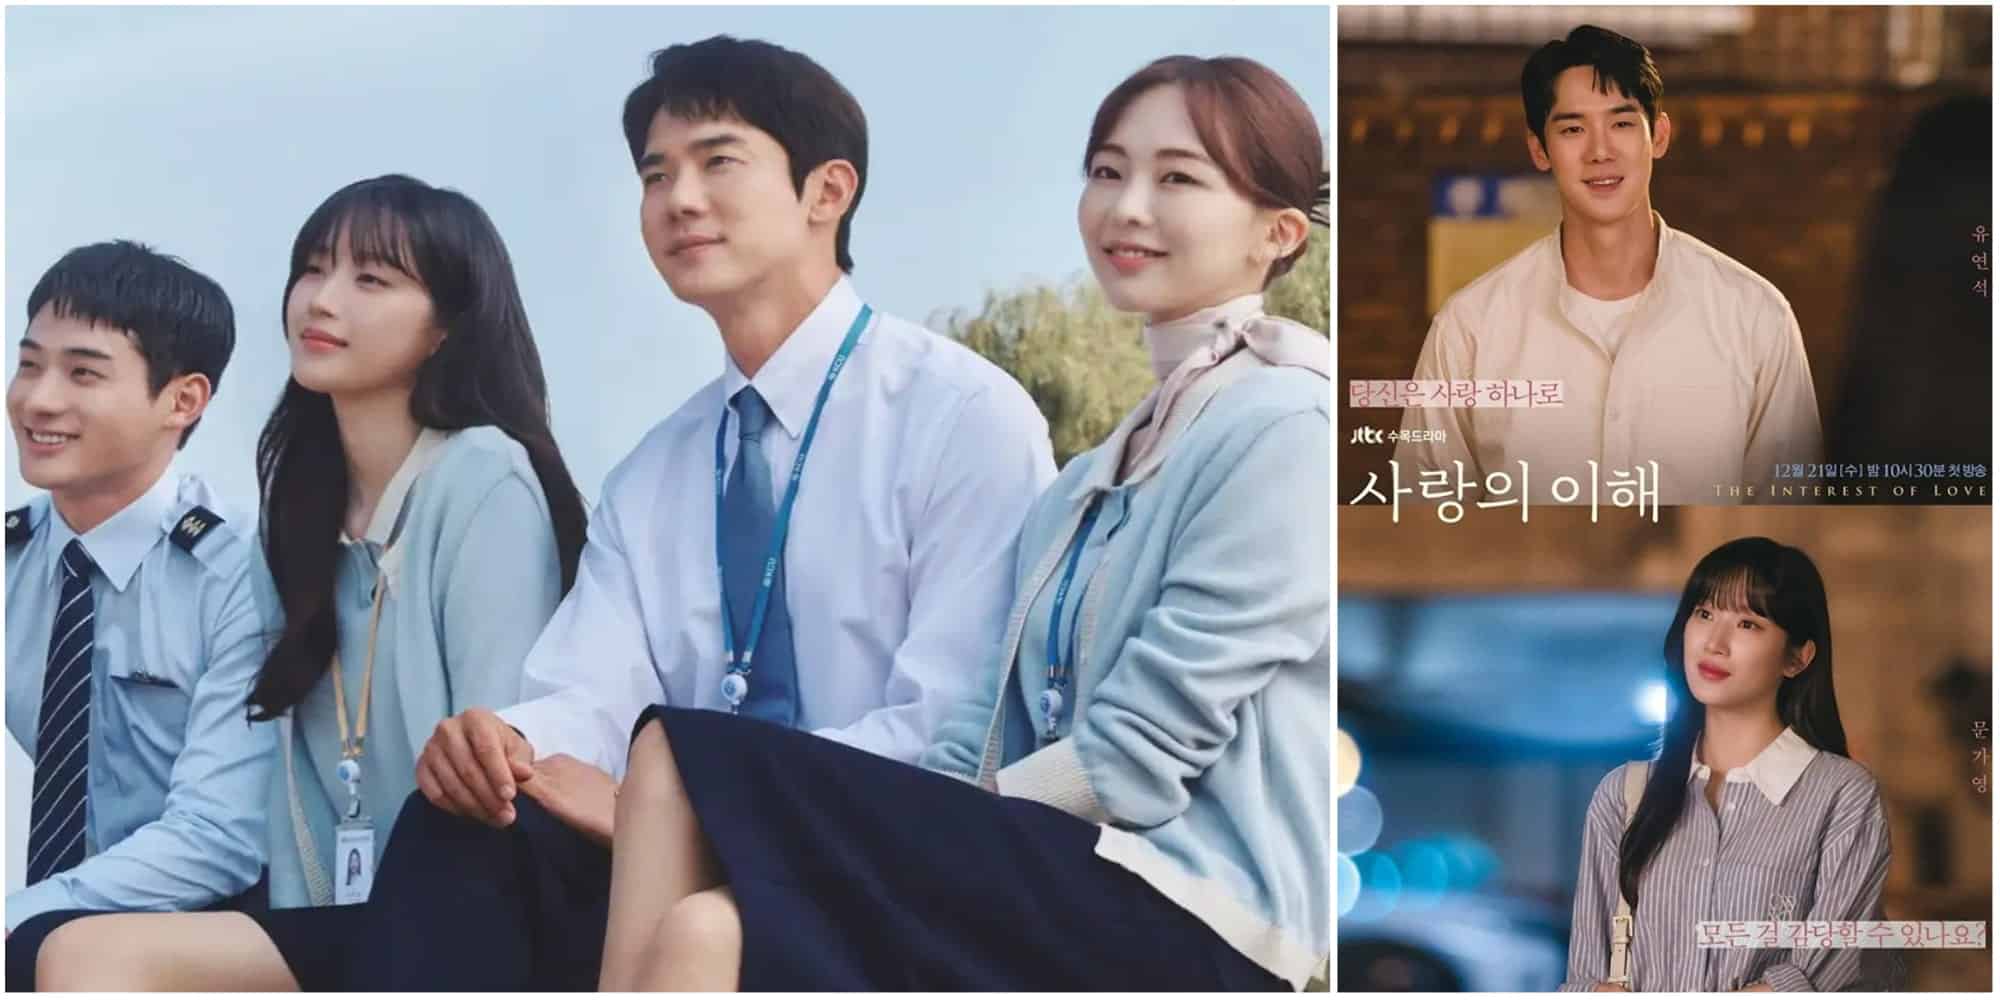 The Interest of Love Romantic K-drama Episode 16 Release Date